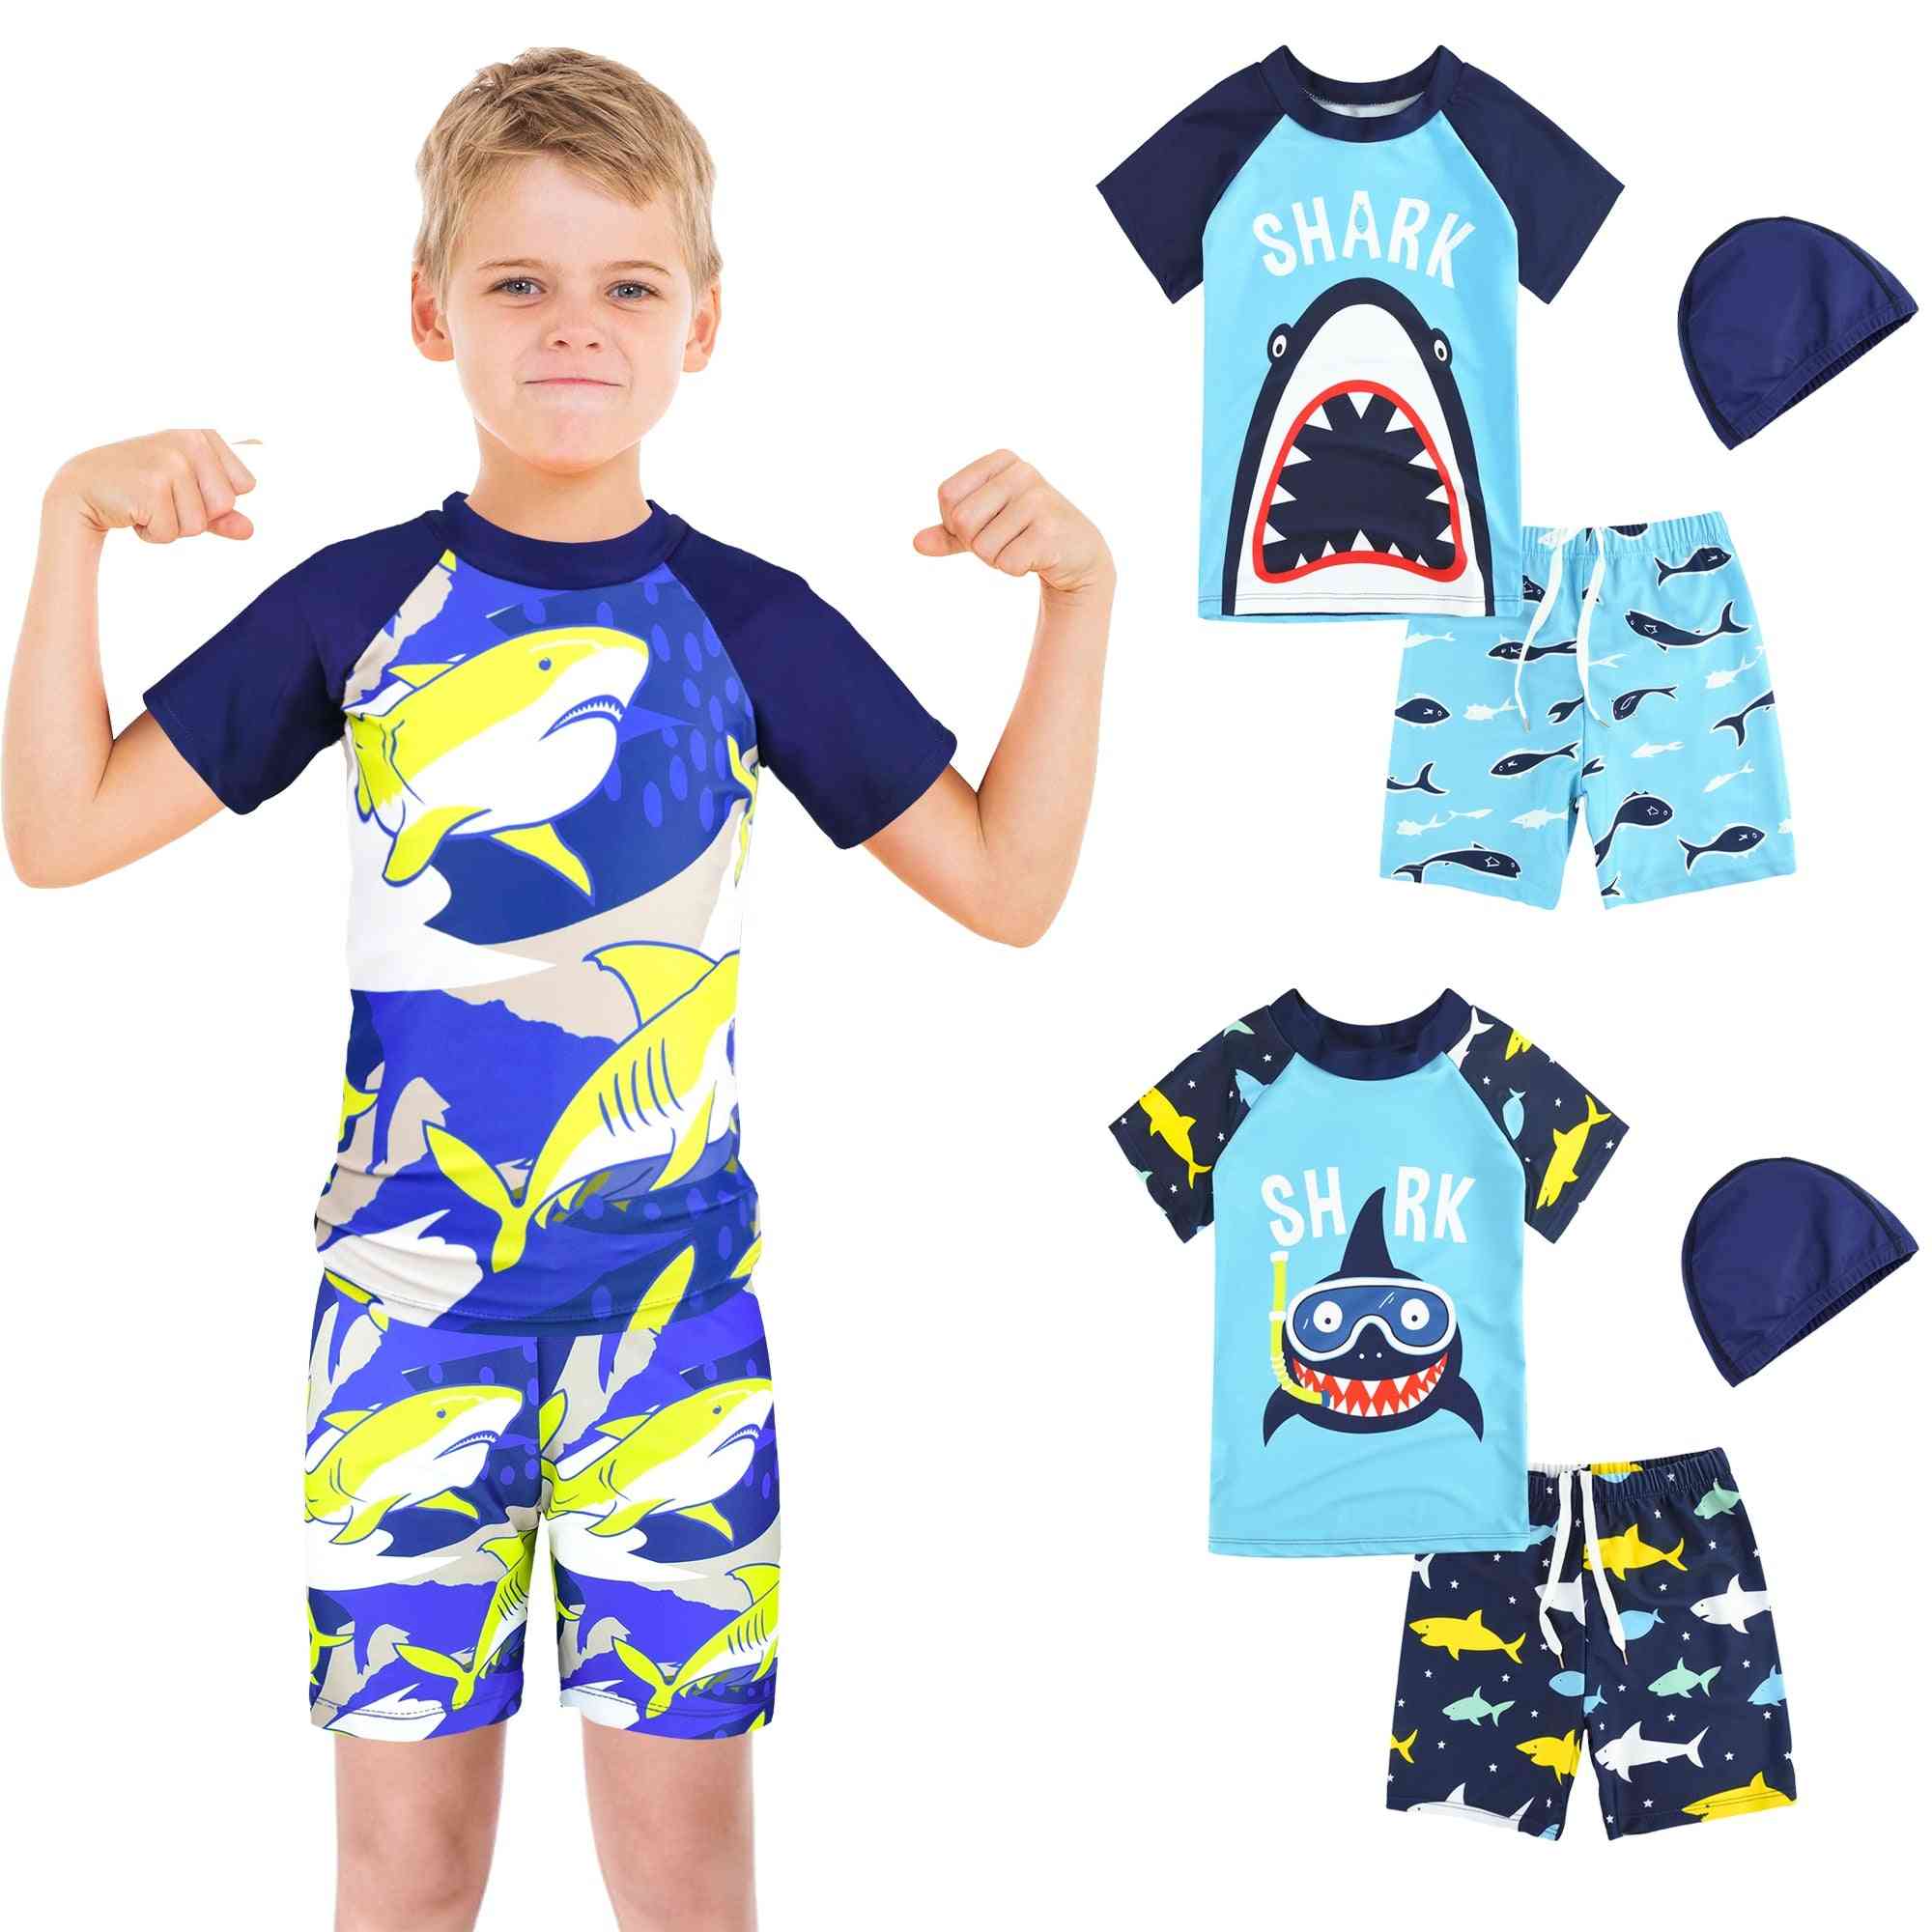 Swimsuit Boy Clothing Set - Toddler Baby Swimming Suit + Cap